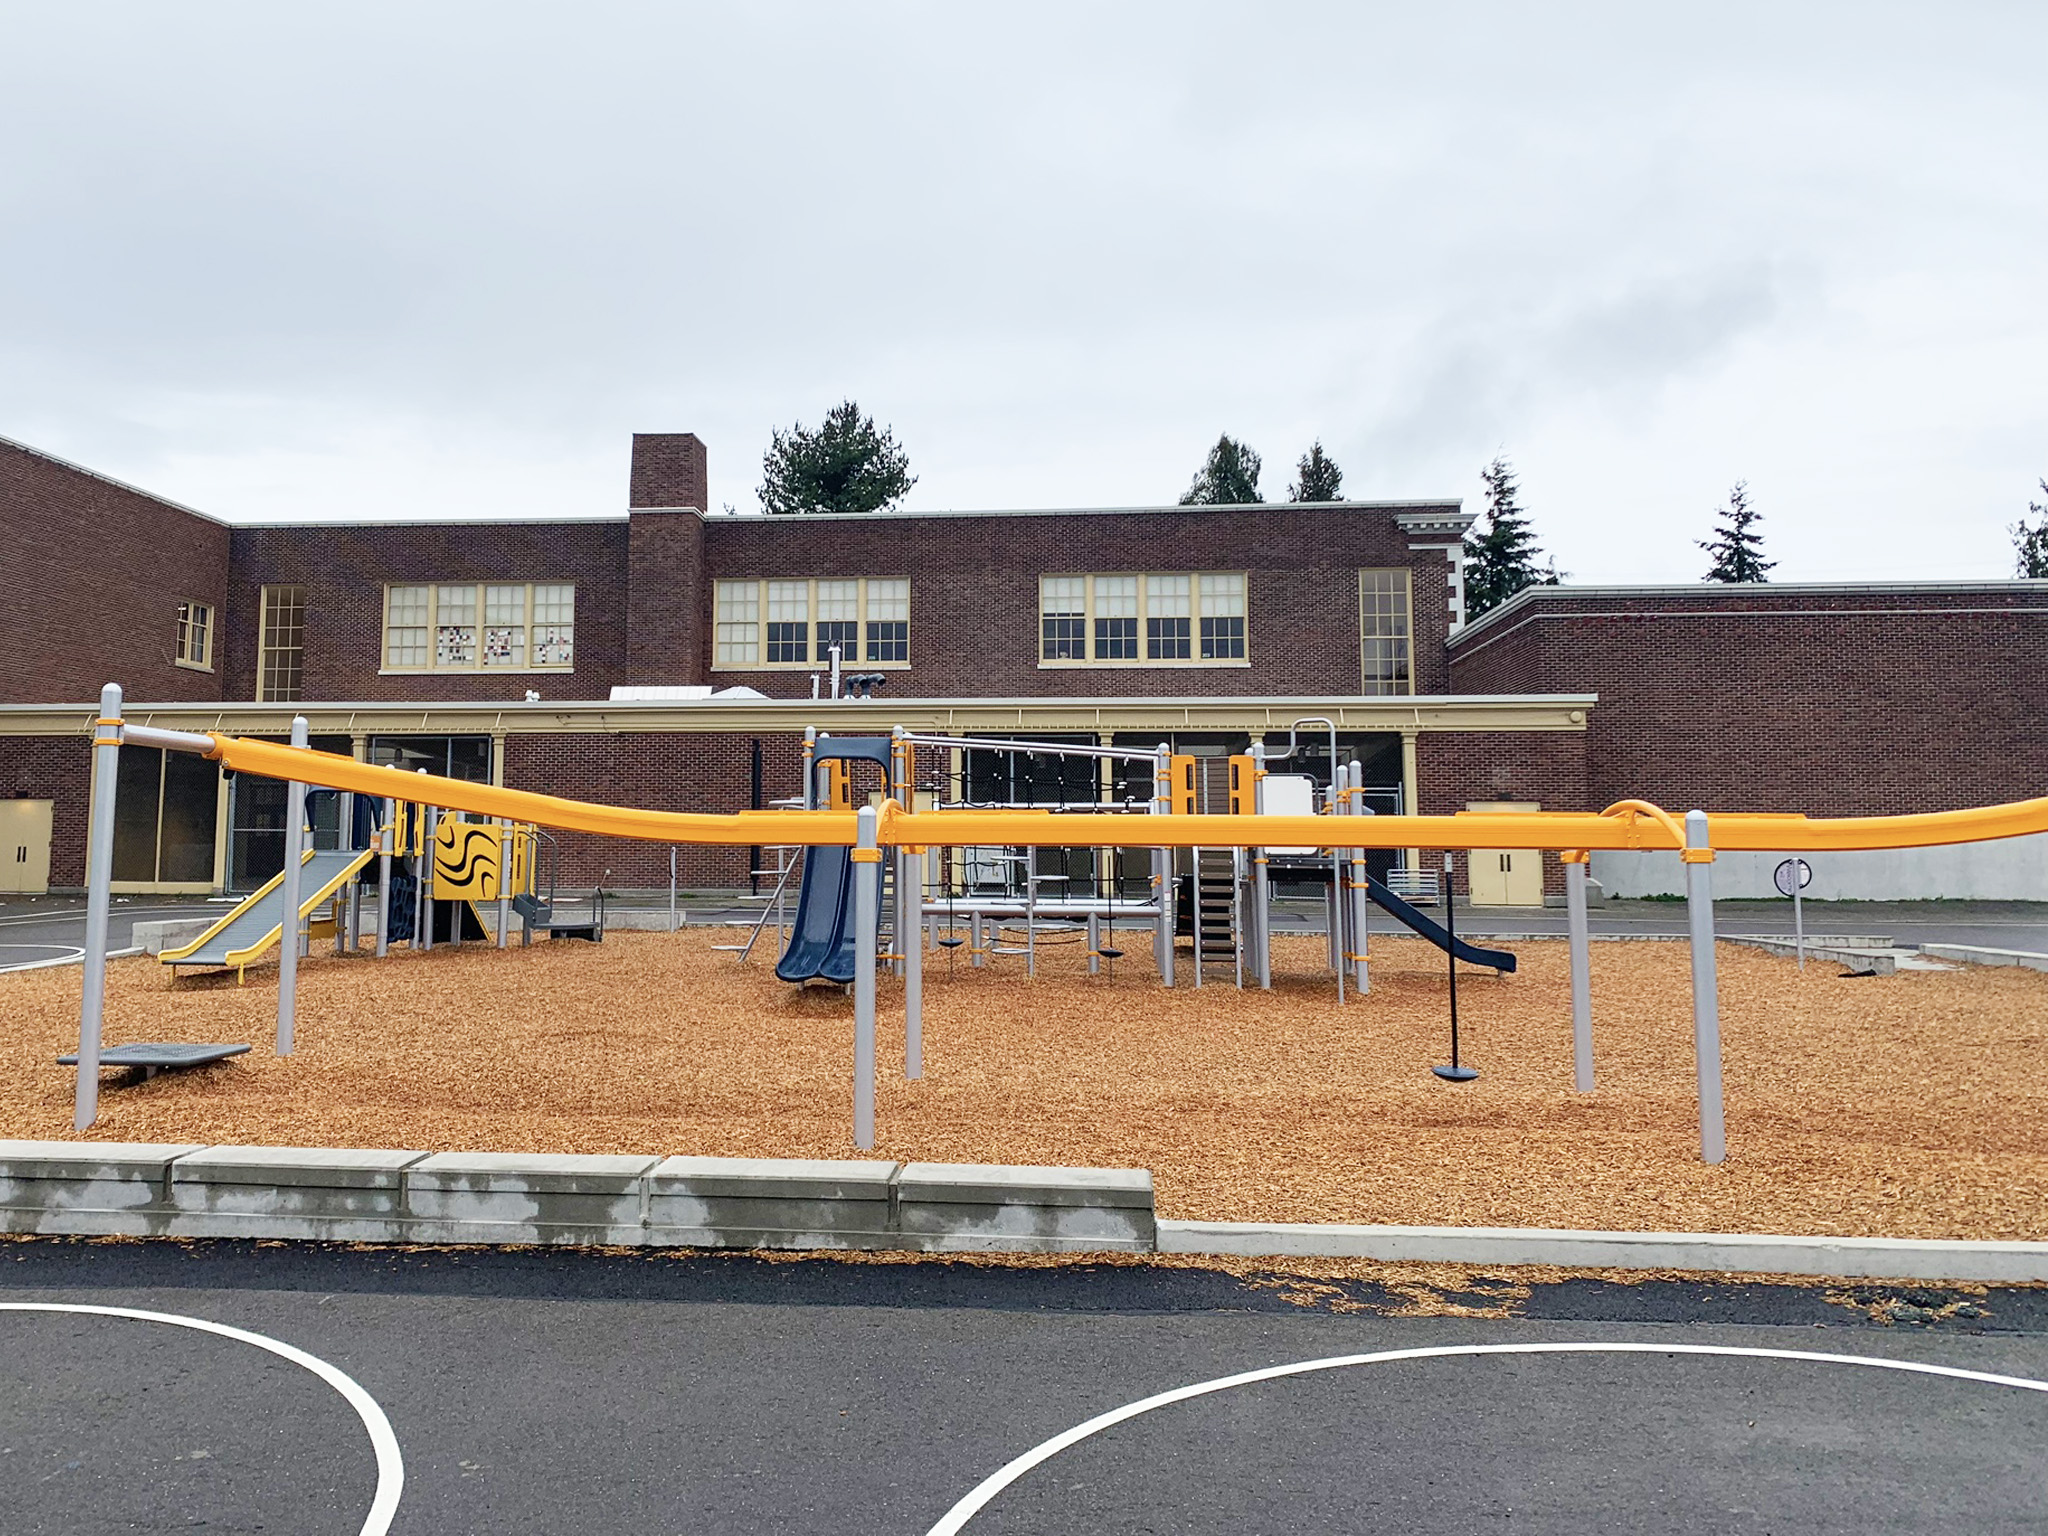 Roxhill Elementary School Playground